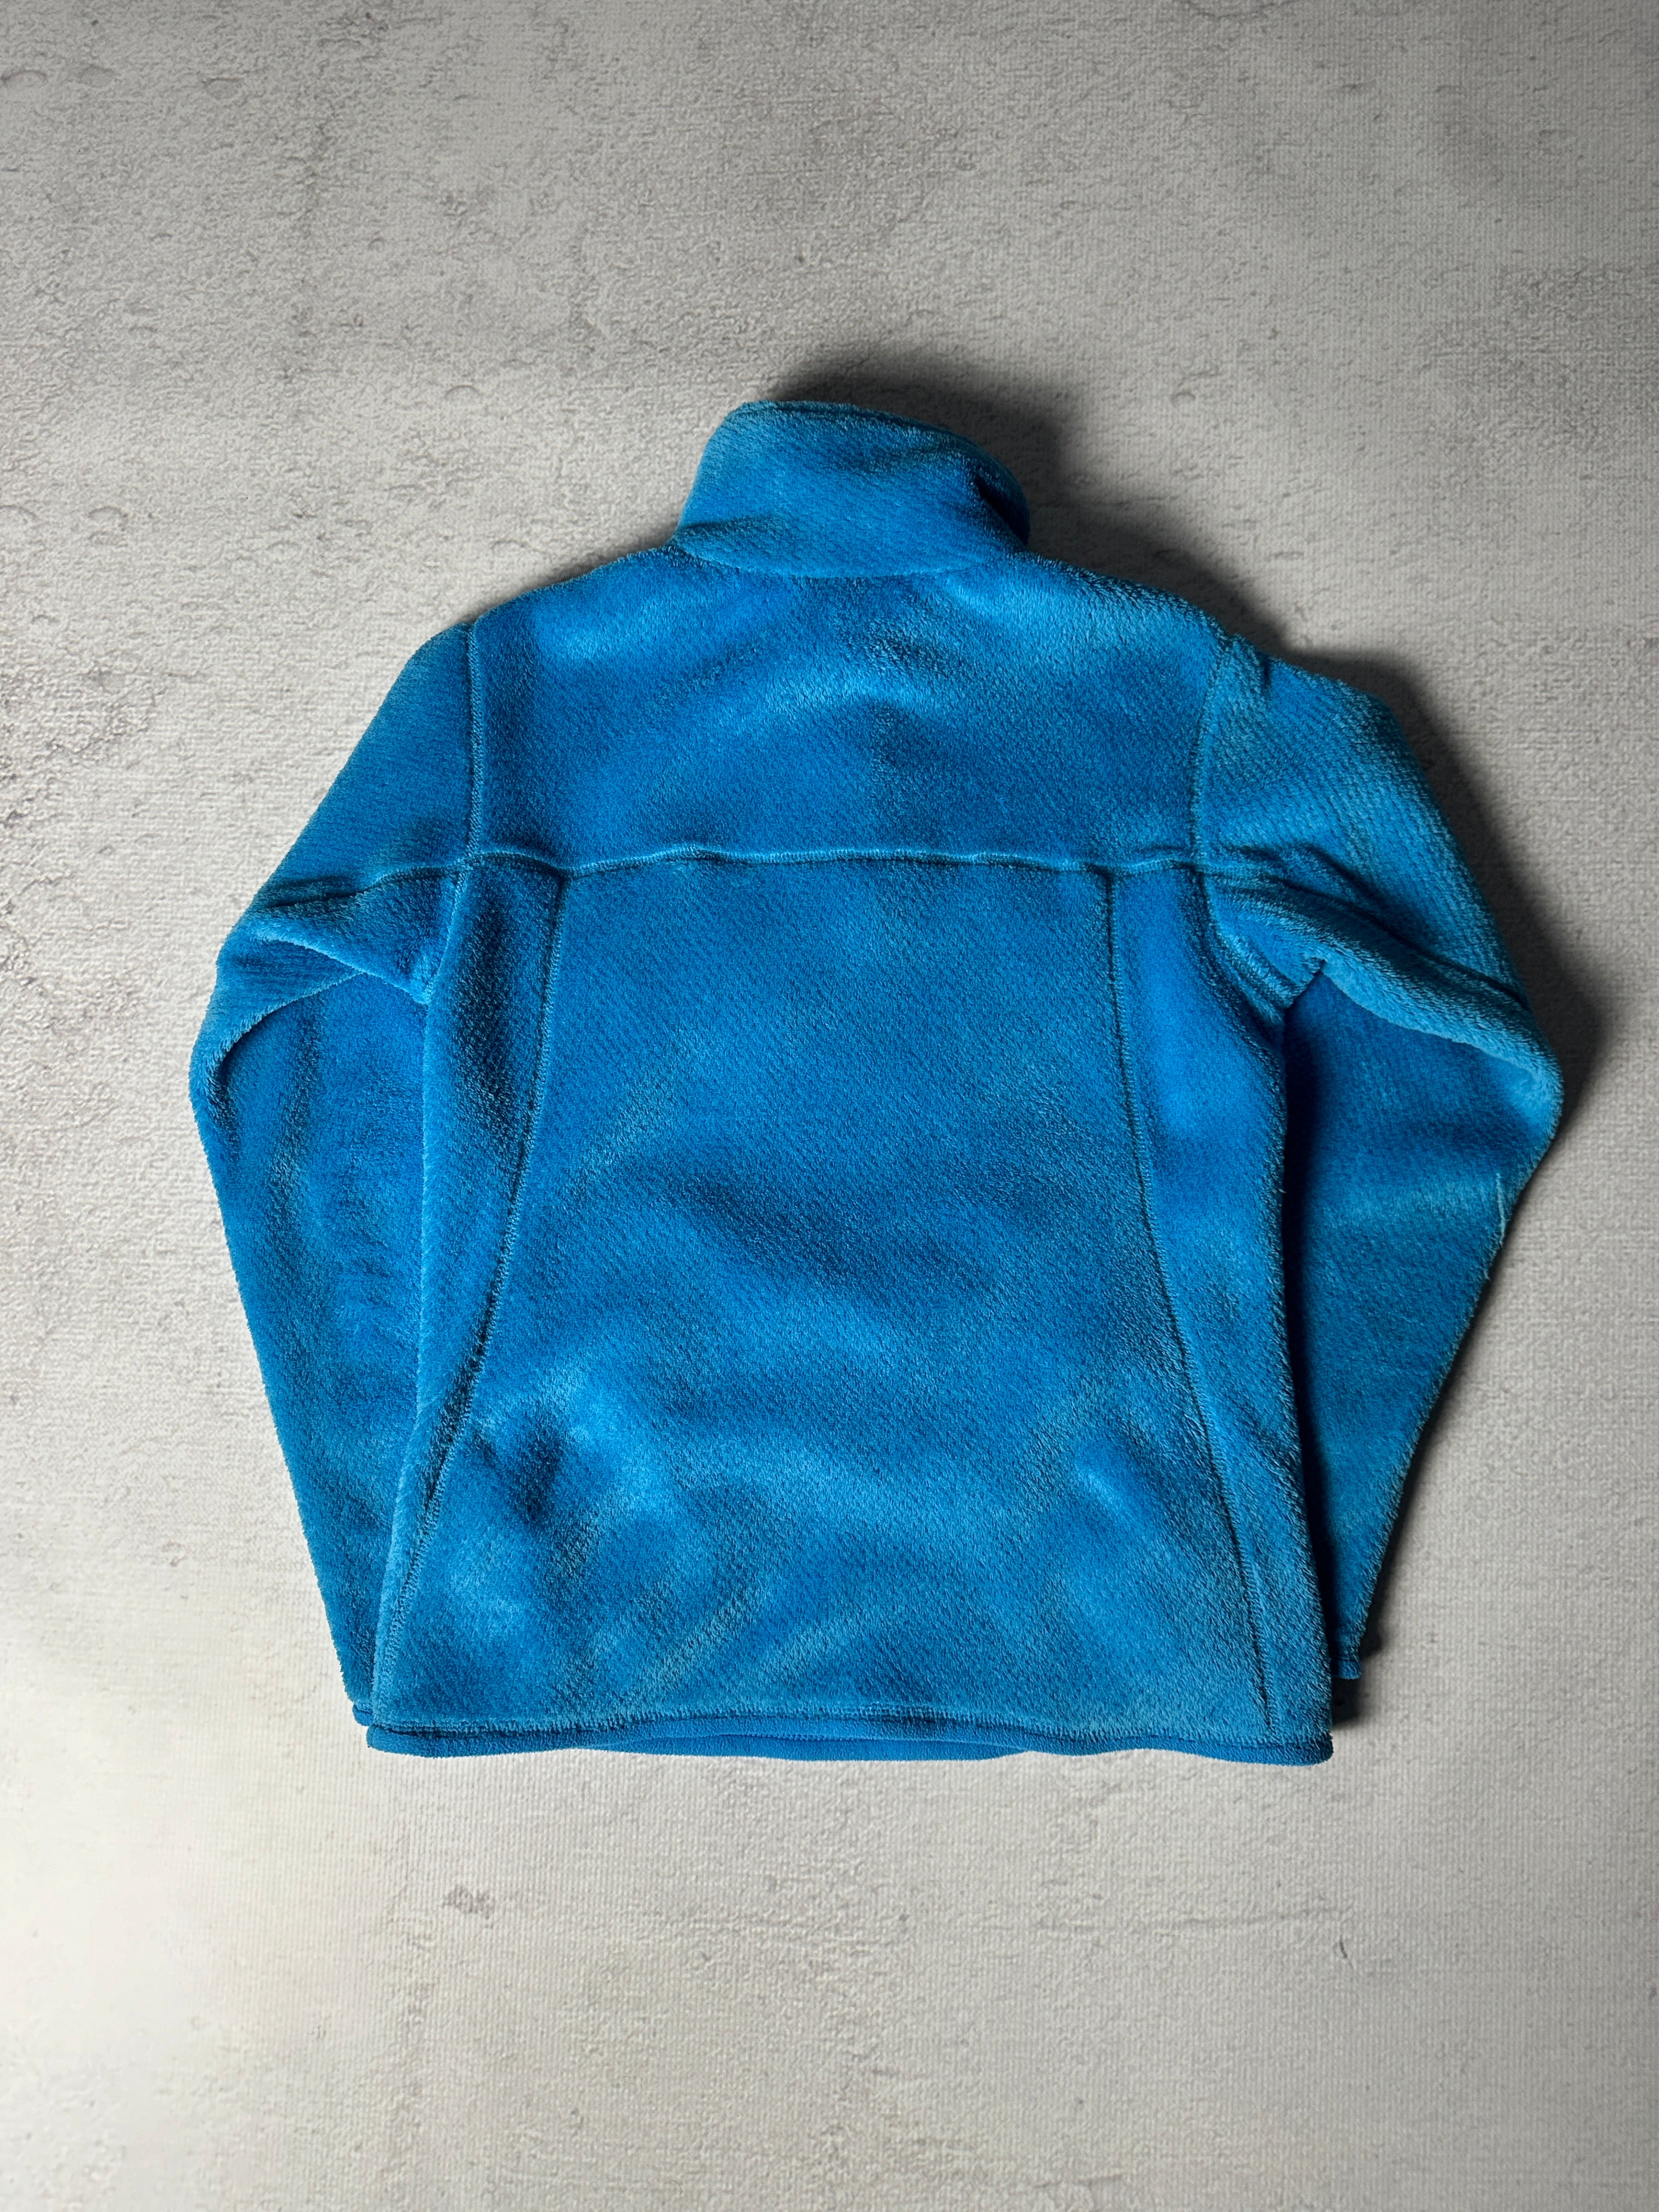 Vintage Patagonia Snap-T Fleece Sweatshirt - Women's Small